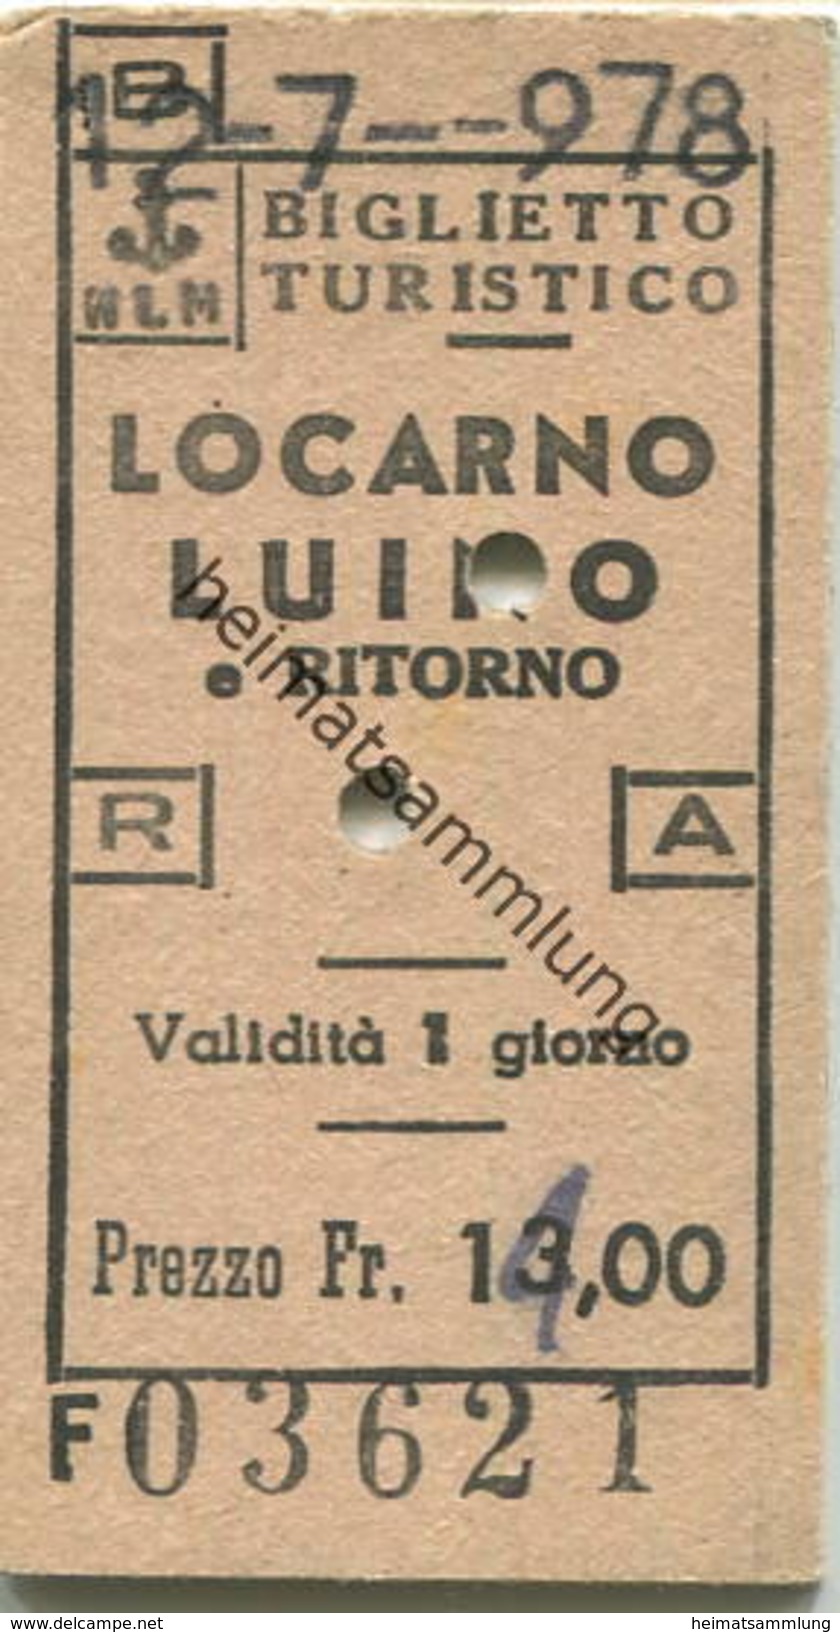 Schweiz - NLM - Locarno Luino - Fahrkarte 1978 - Europa